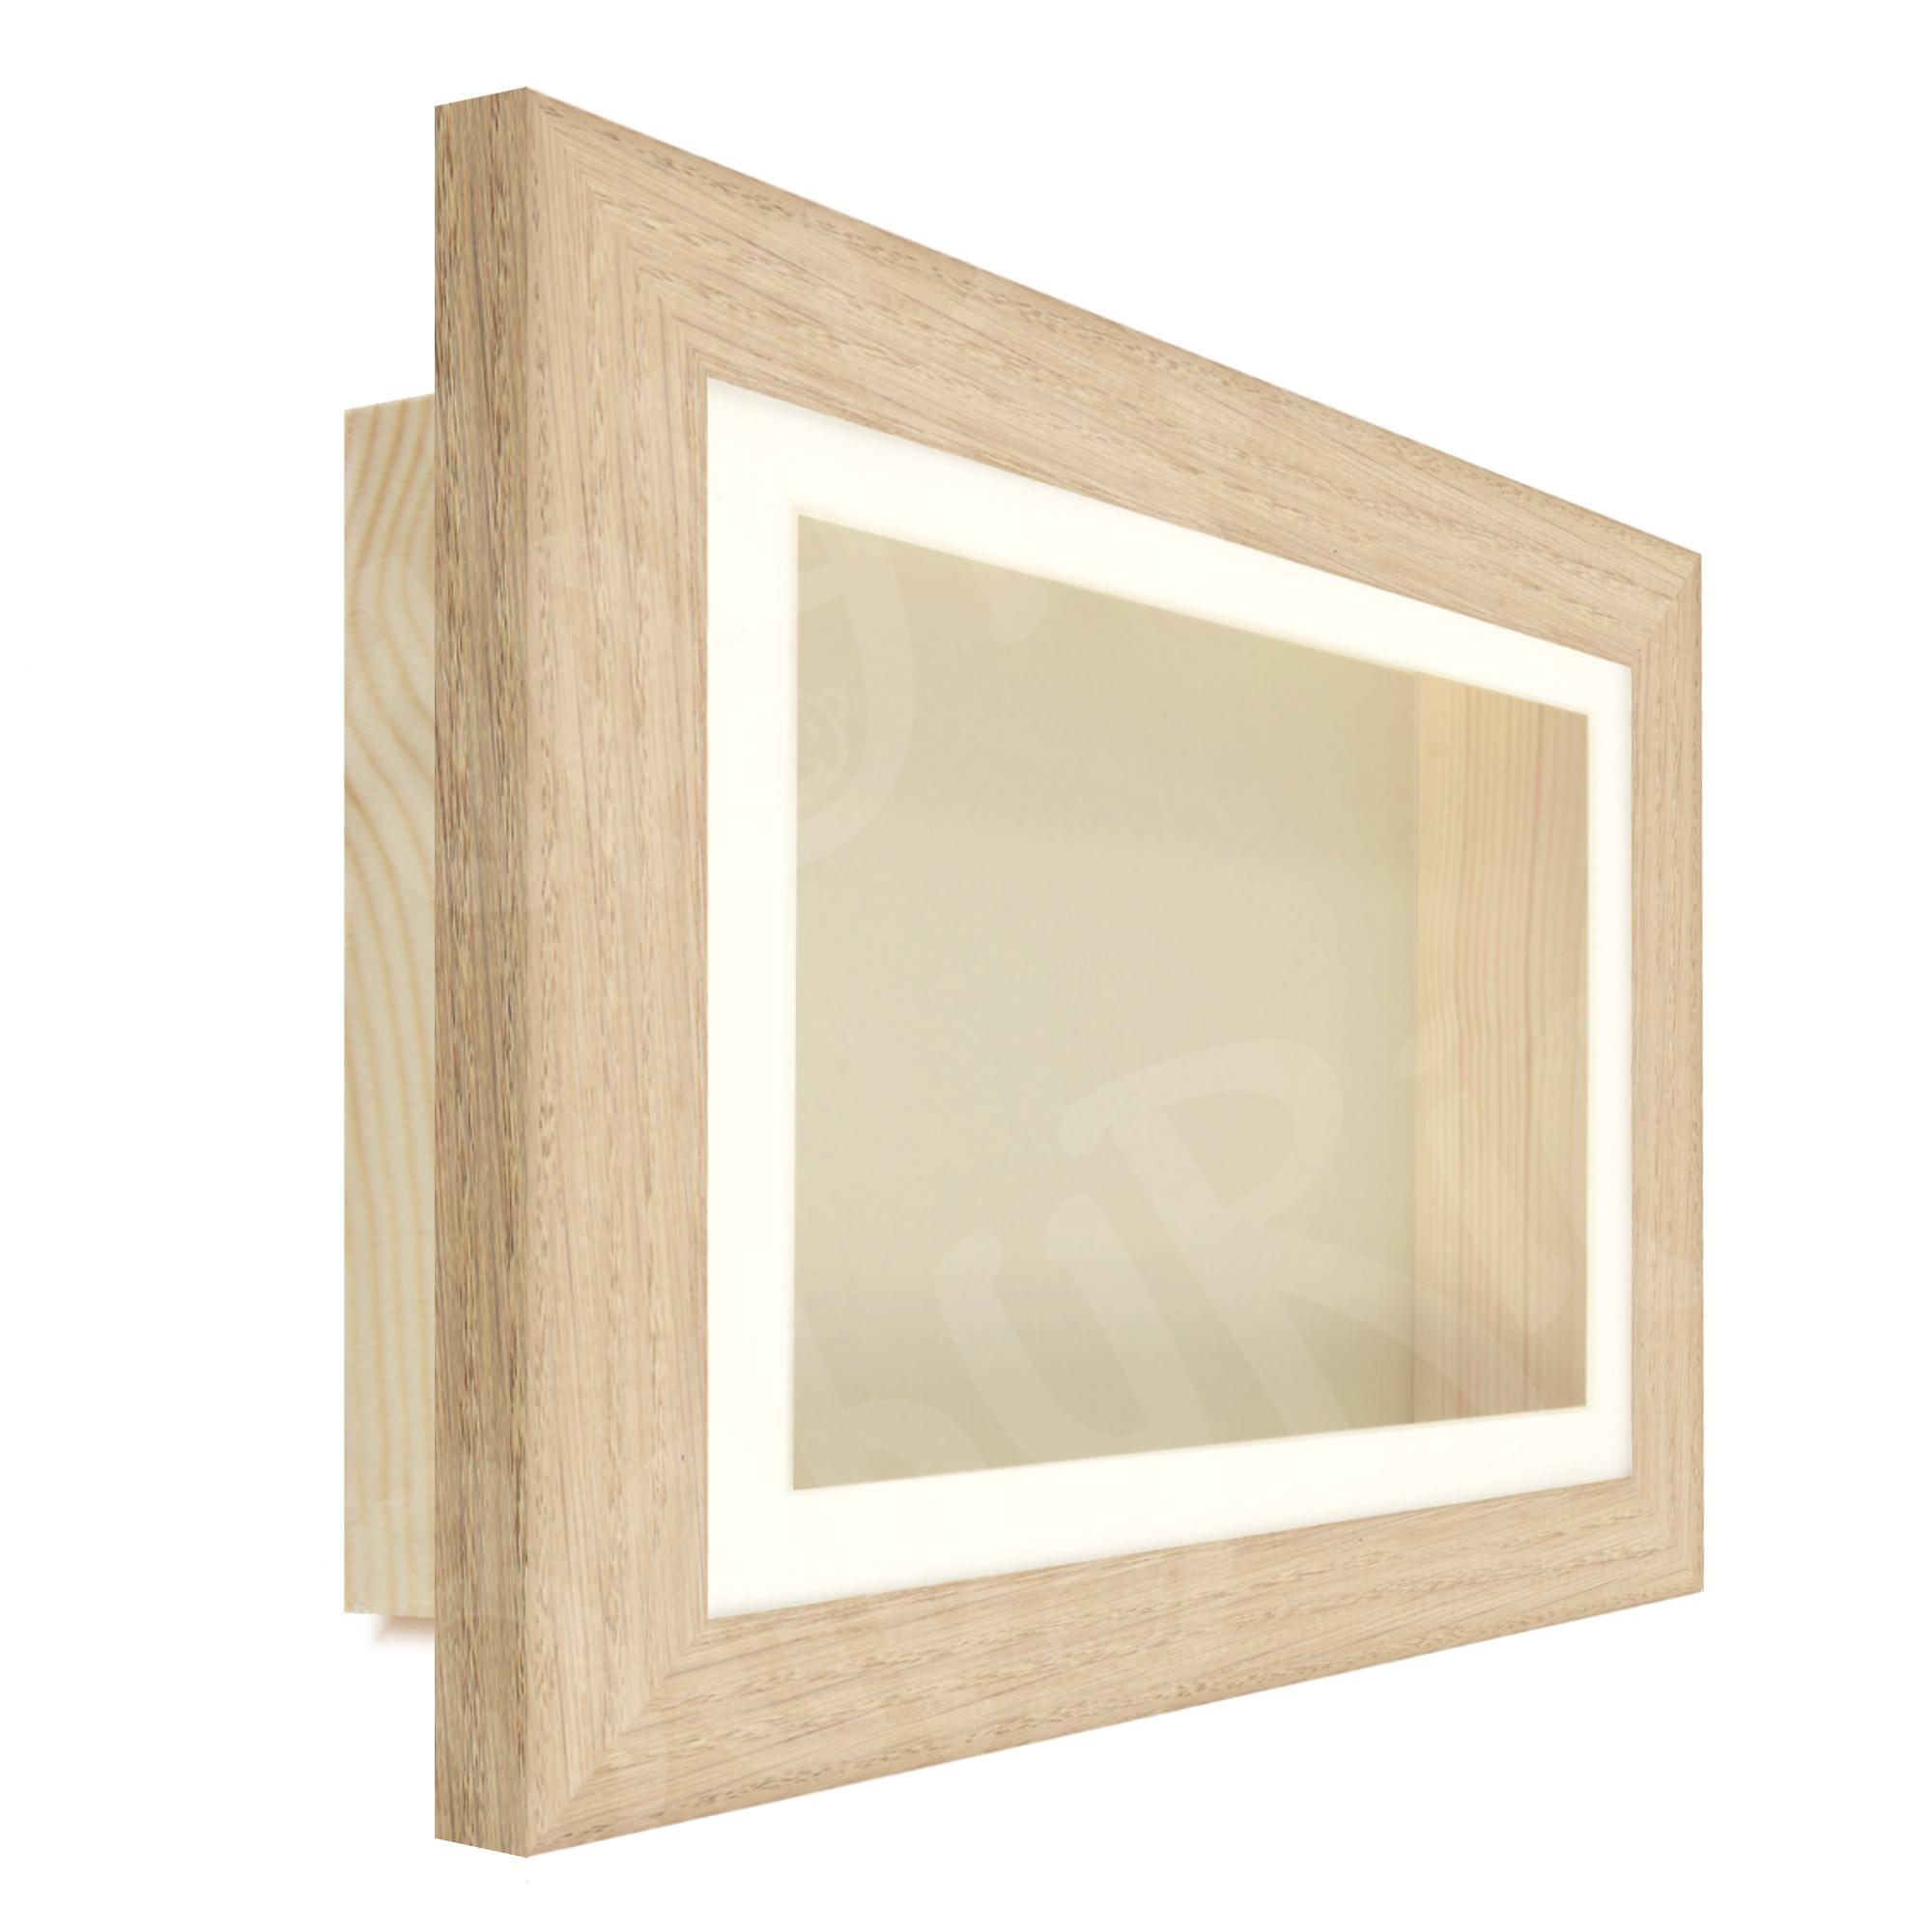 Solid Oak Wooden Deep Box Display Frame